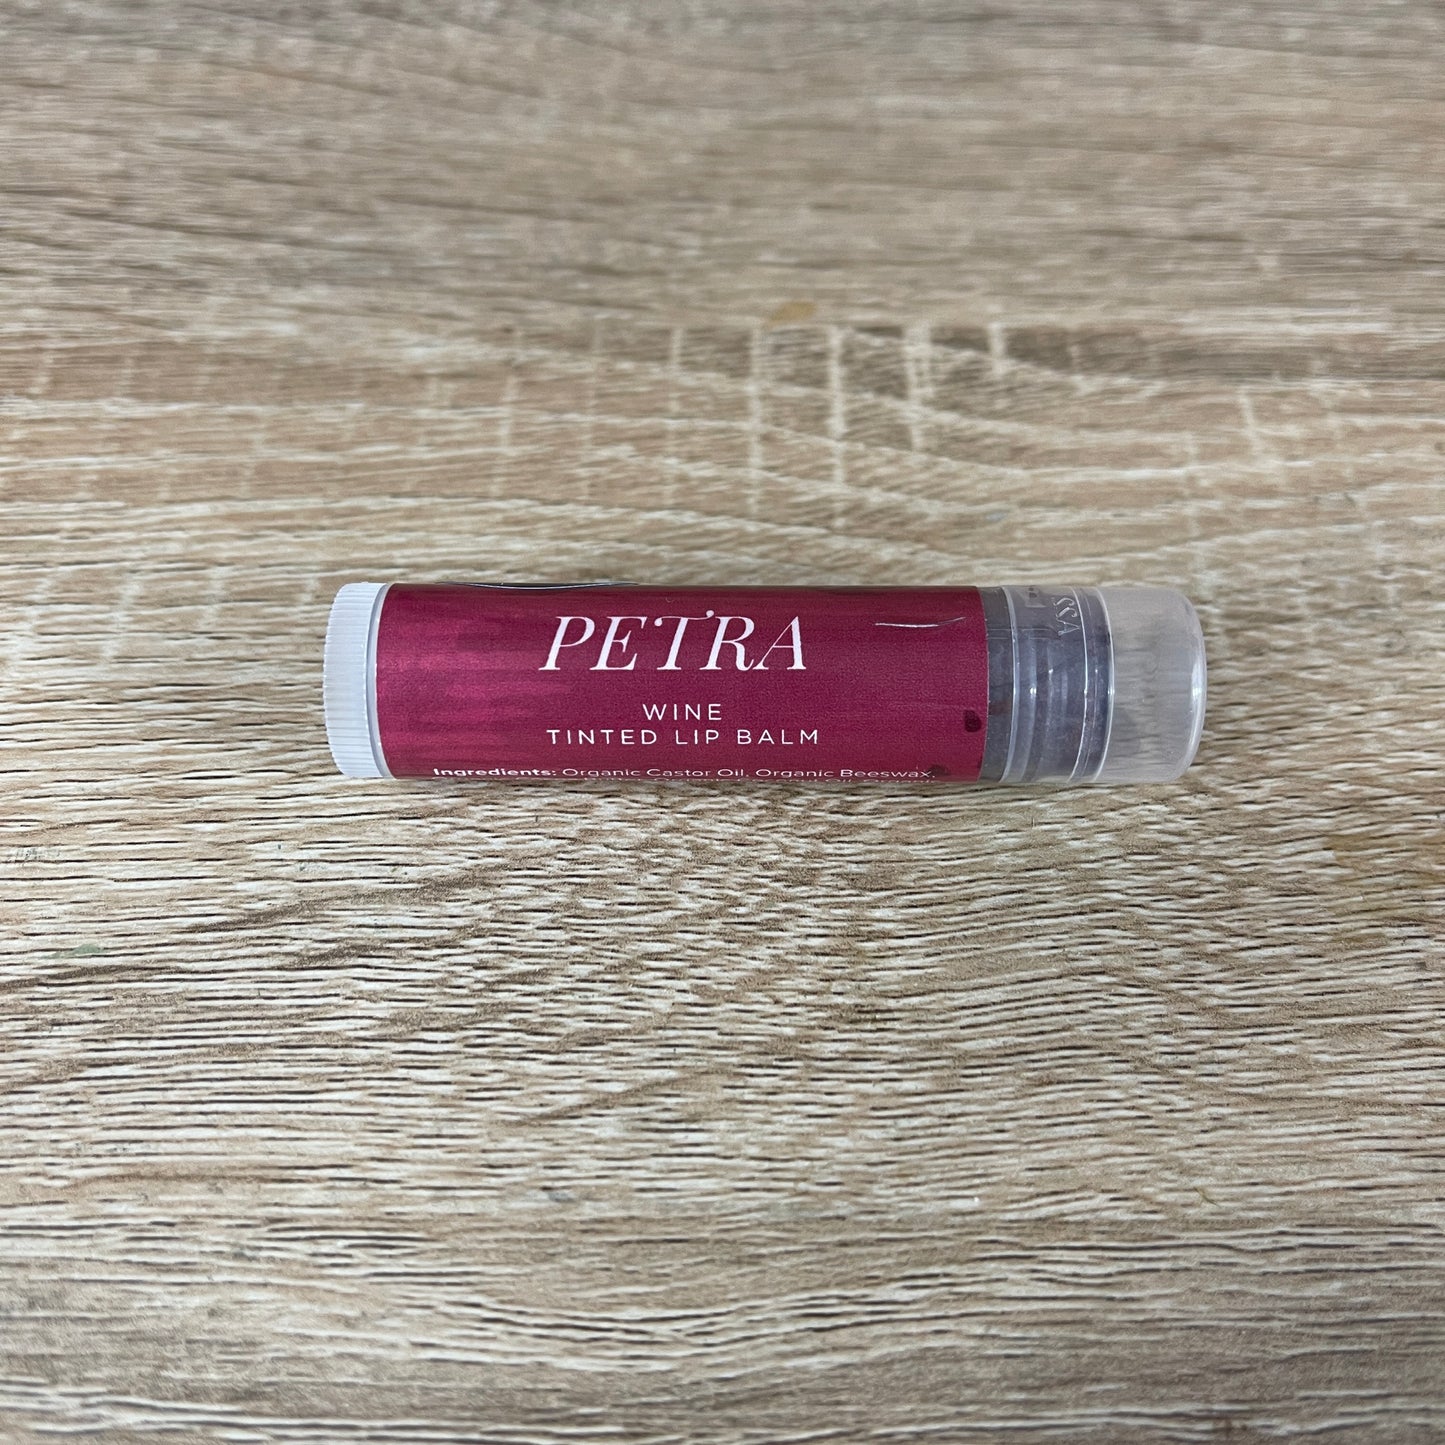 Tinted Lip Balm - Petra (Wine)